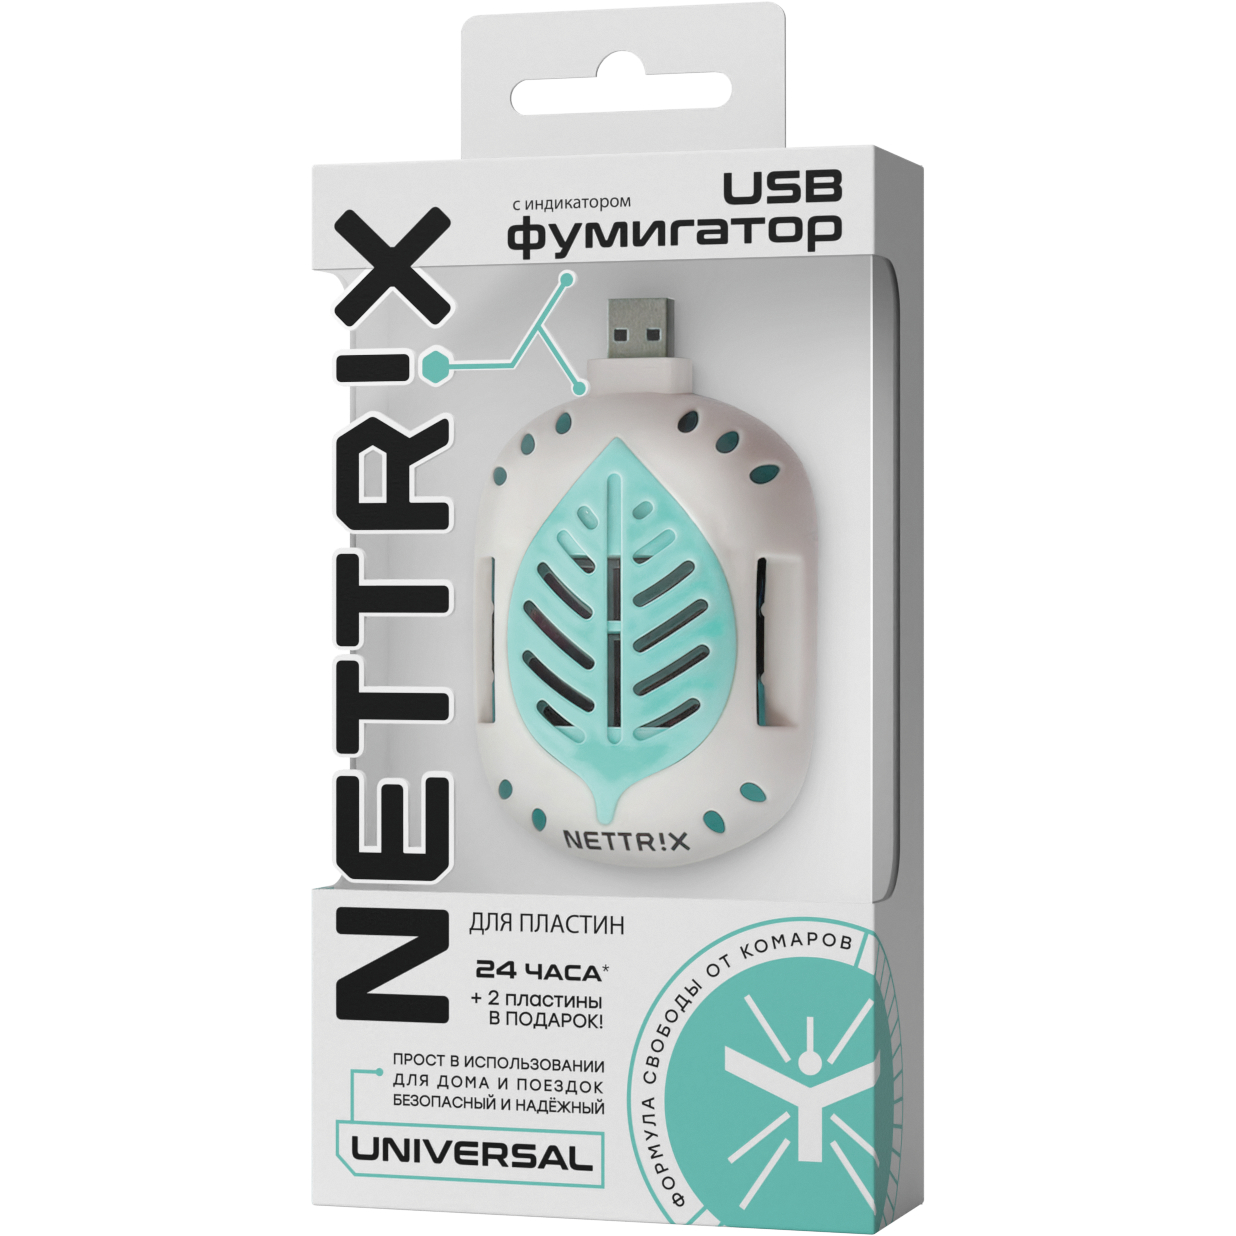 Фумигатор USB Nettrix Universal для пластин